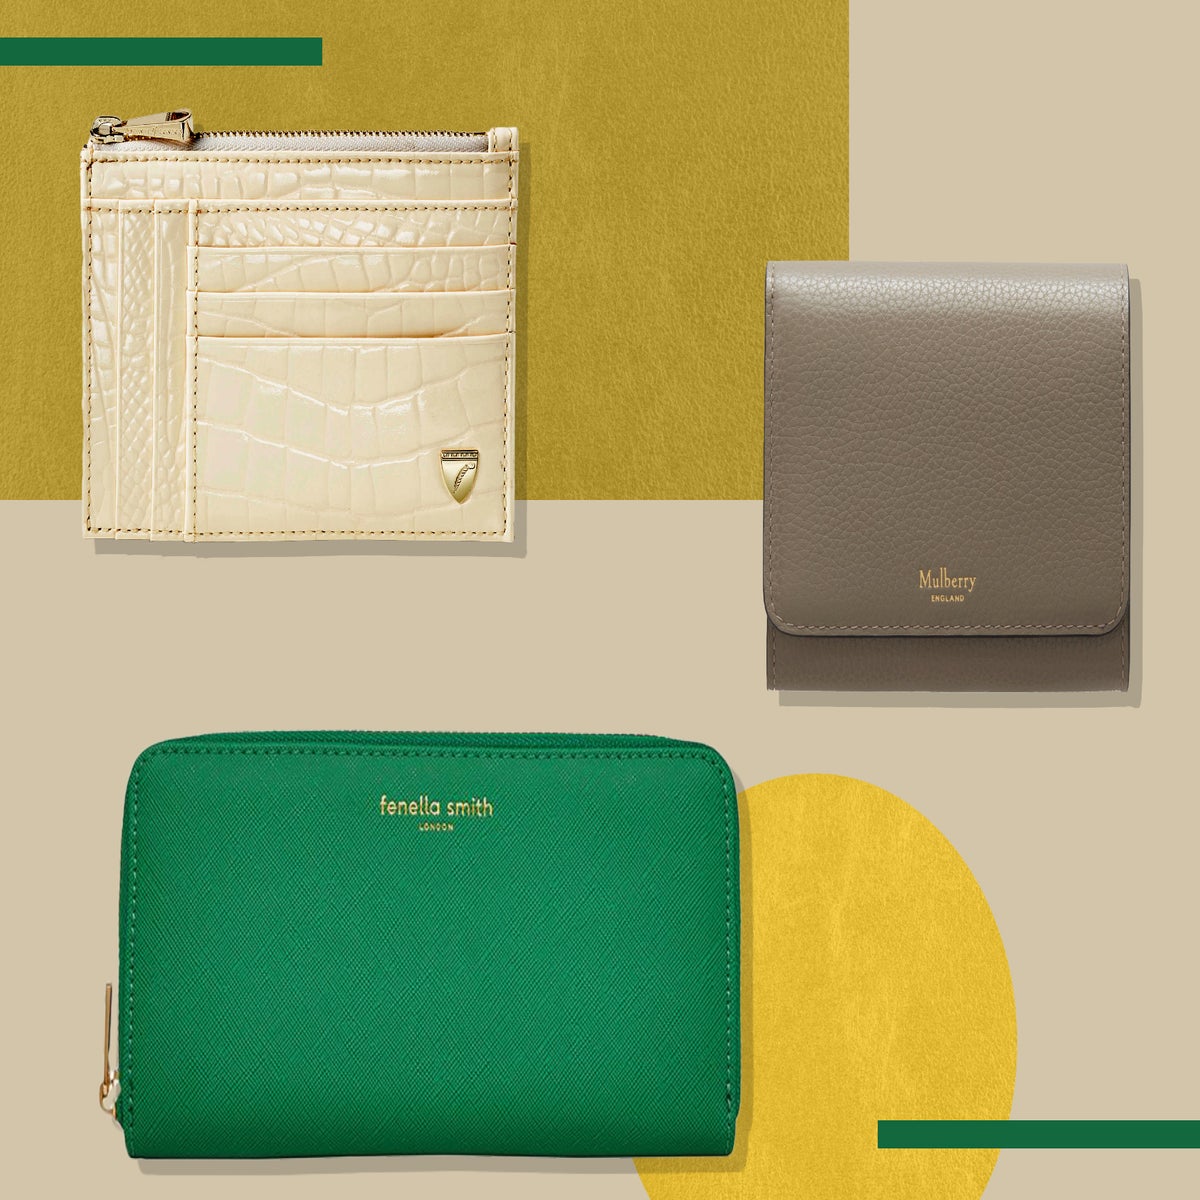 Solid Black - RFID Modern Wristlet Wallet - The Handbag Store